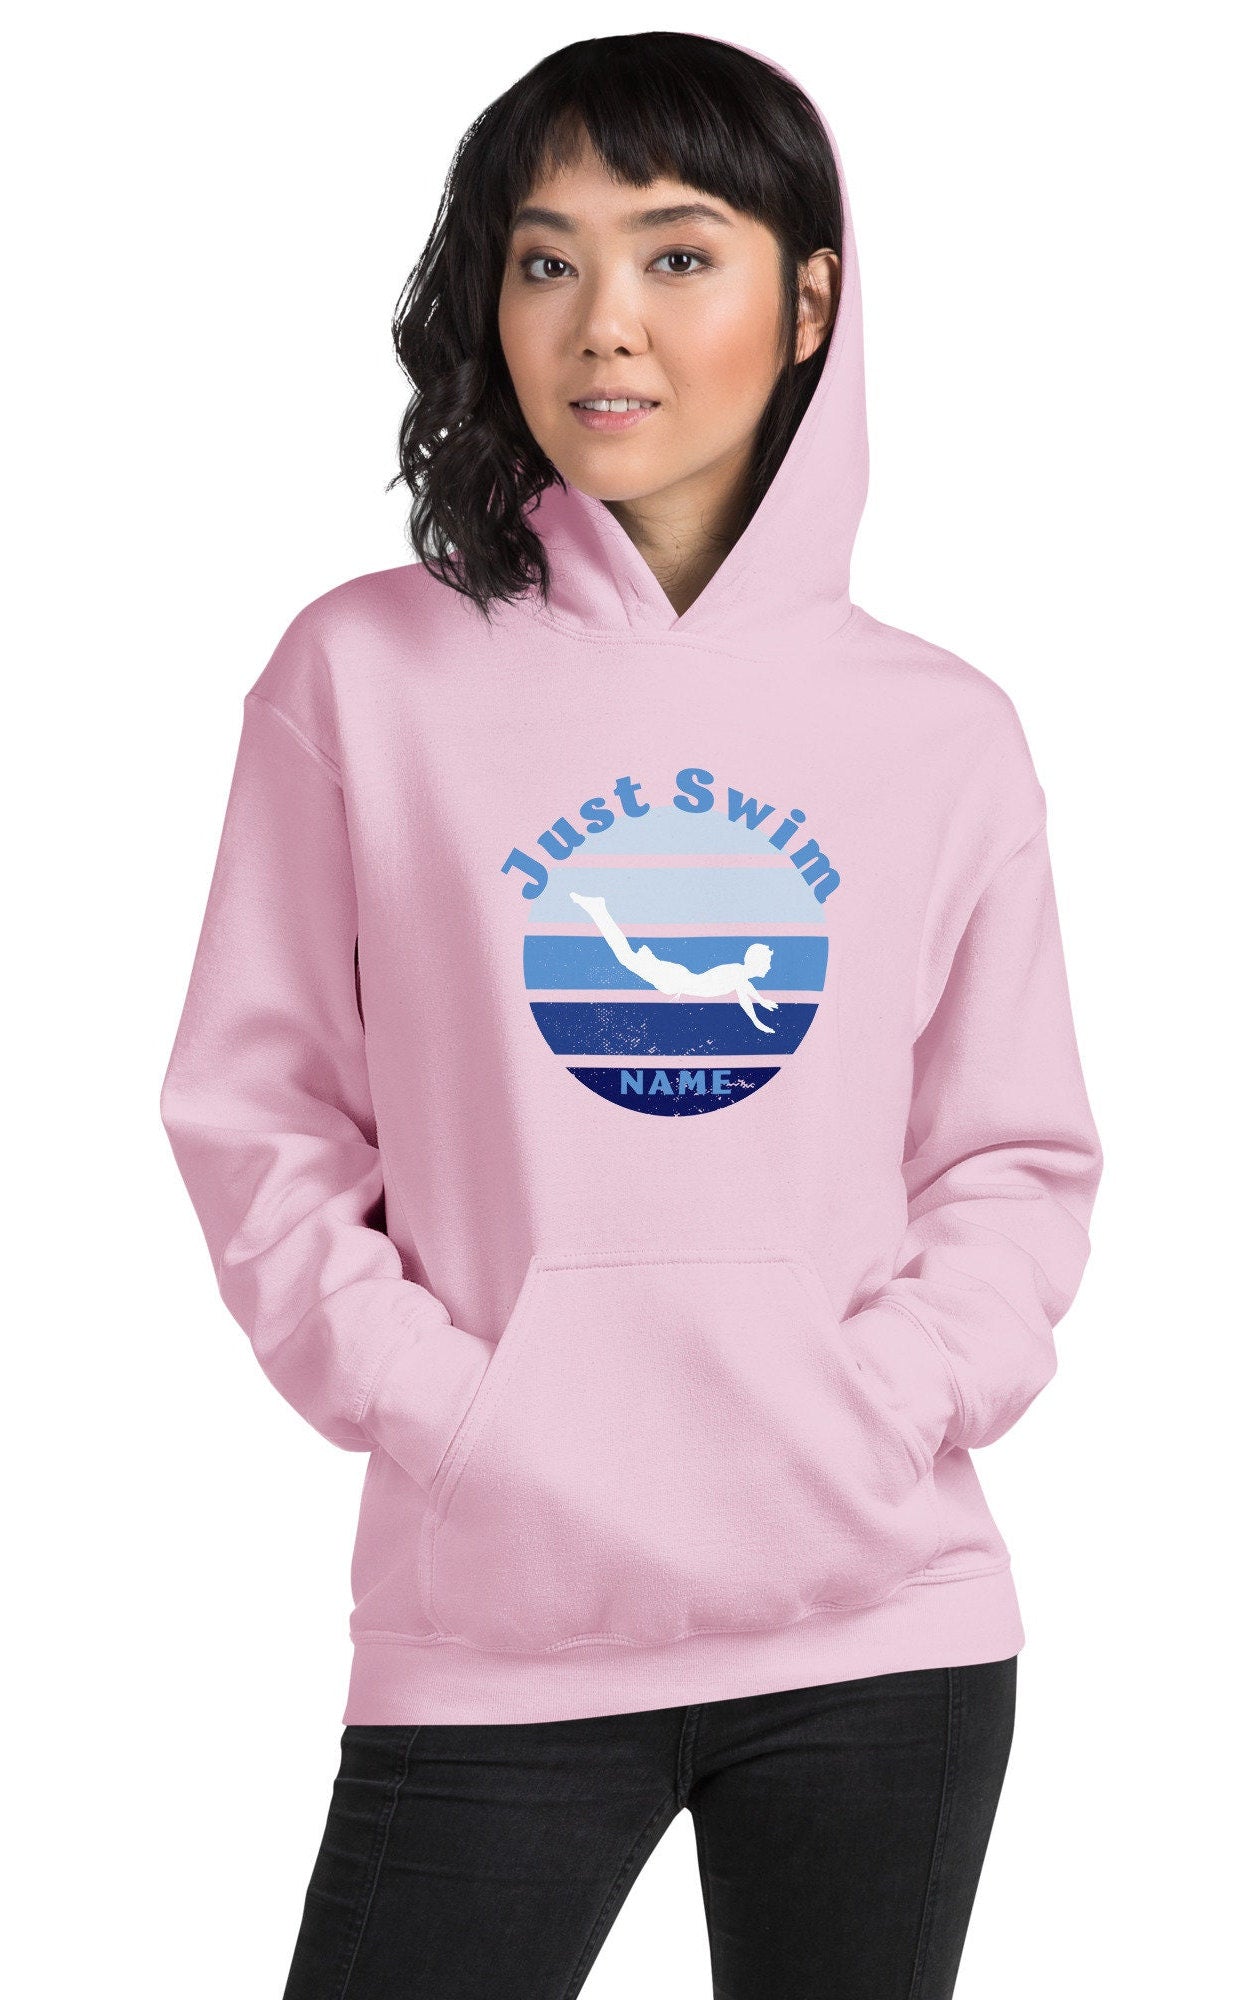 Swwimmer Hoodie. Swim team sweater, Swim Coach Gift